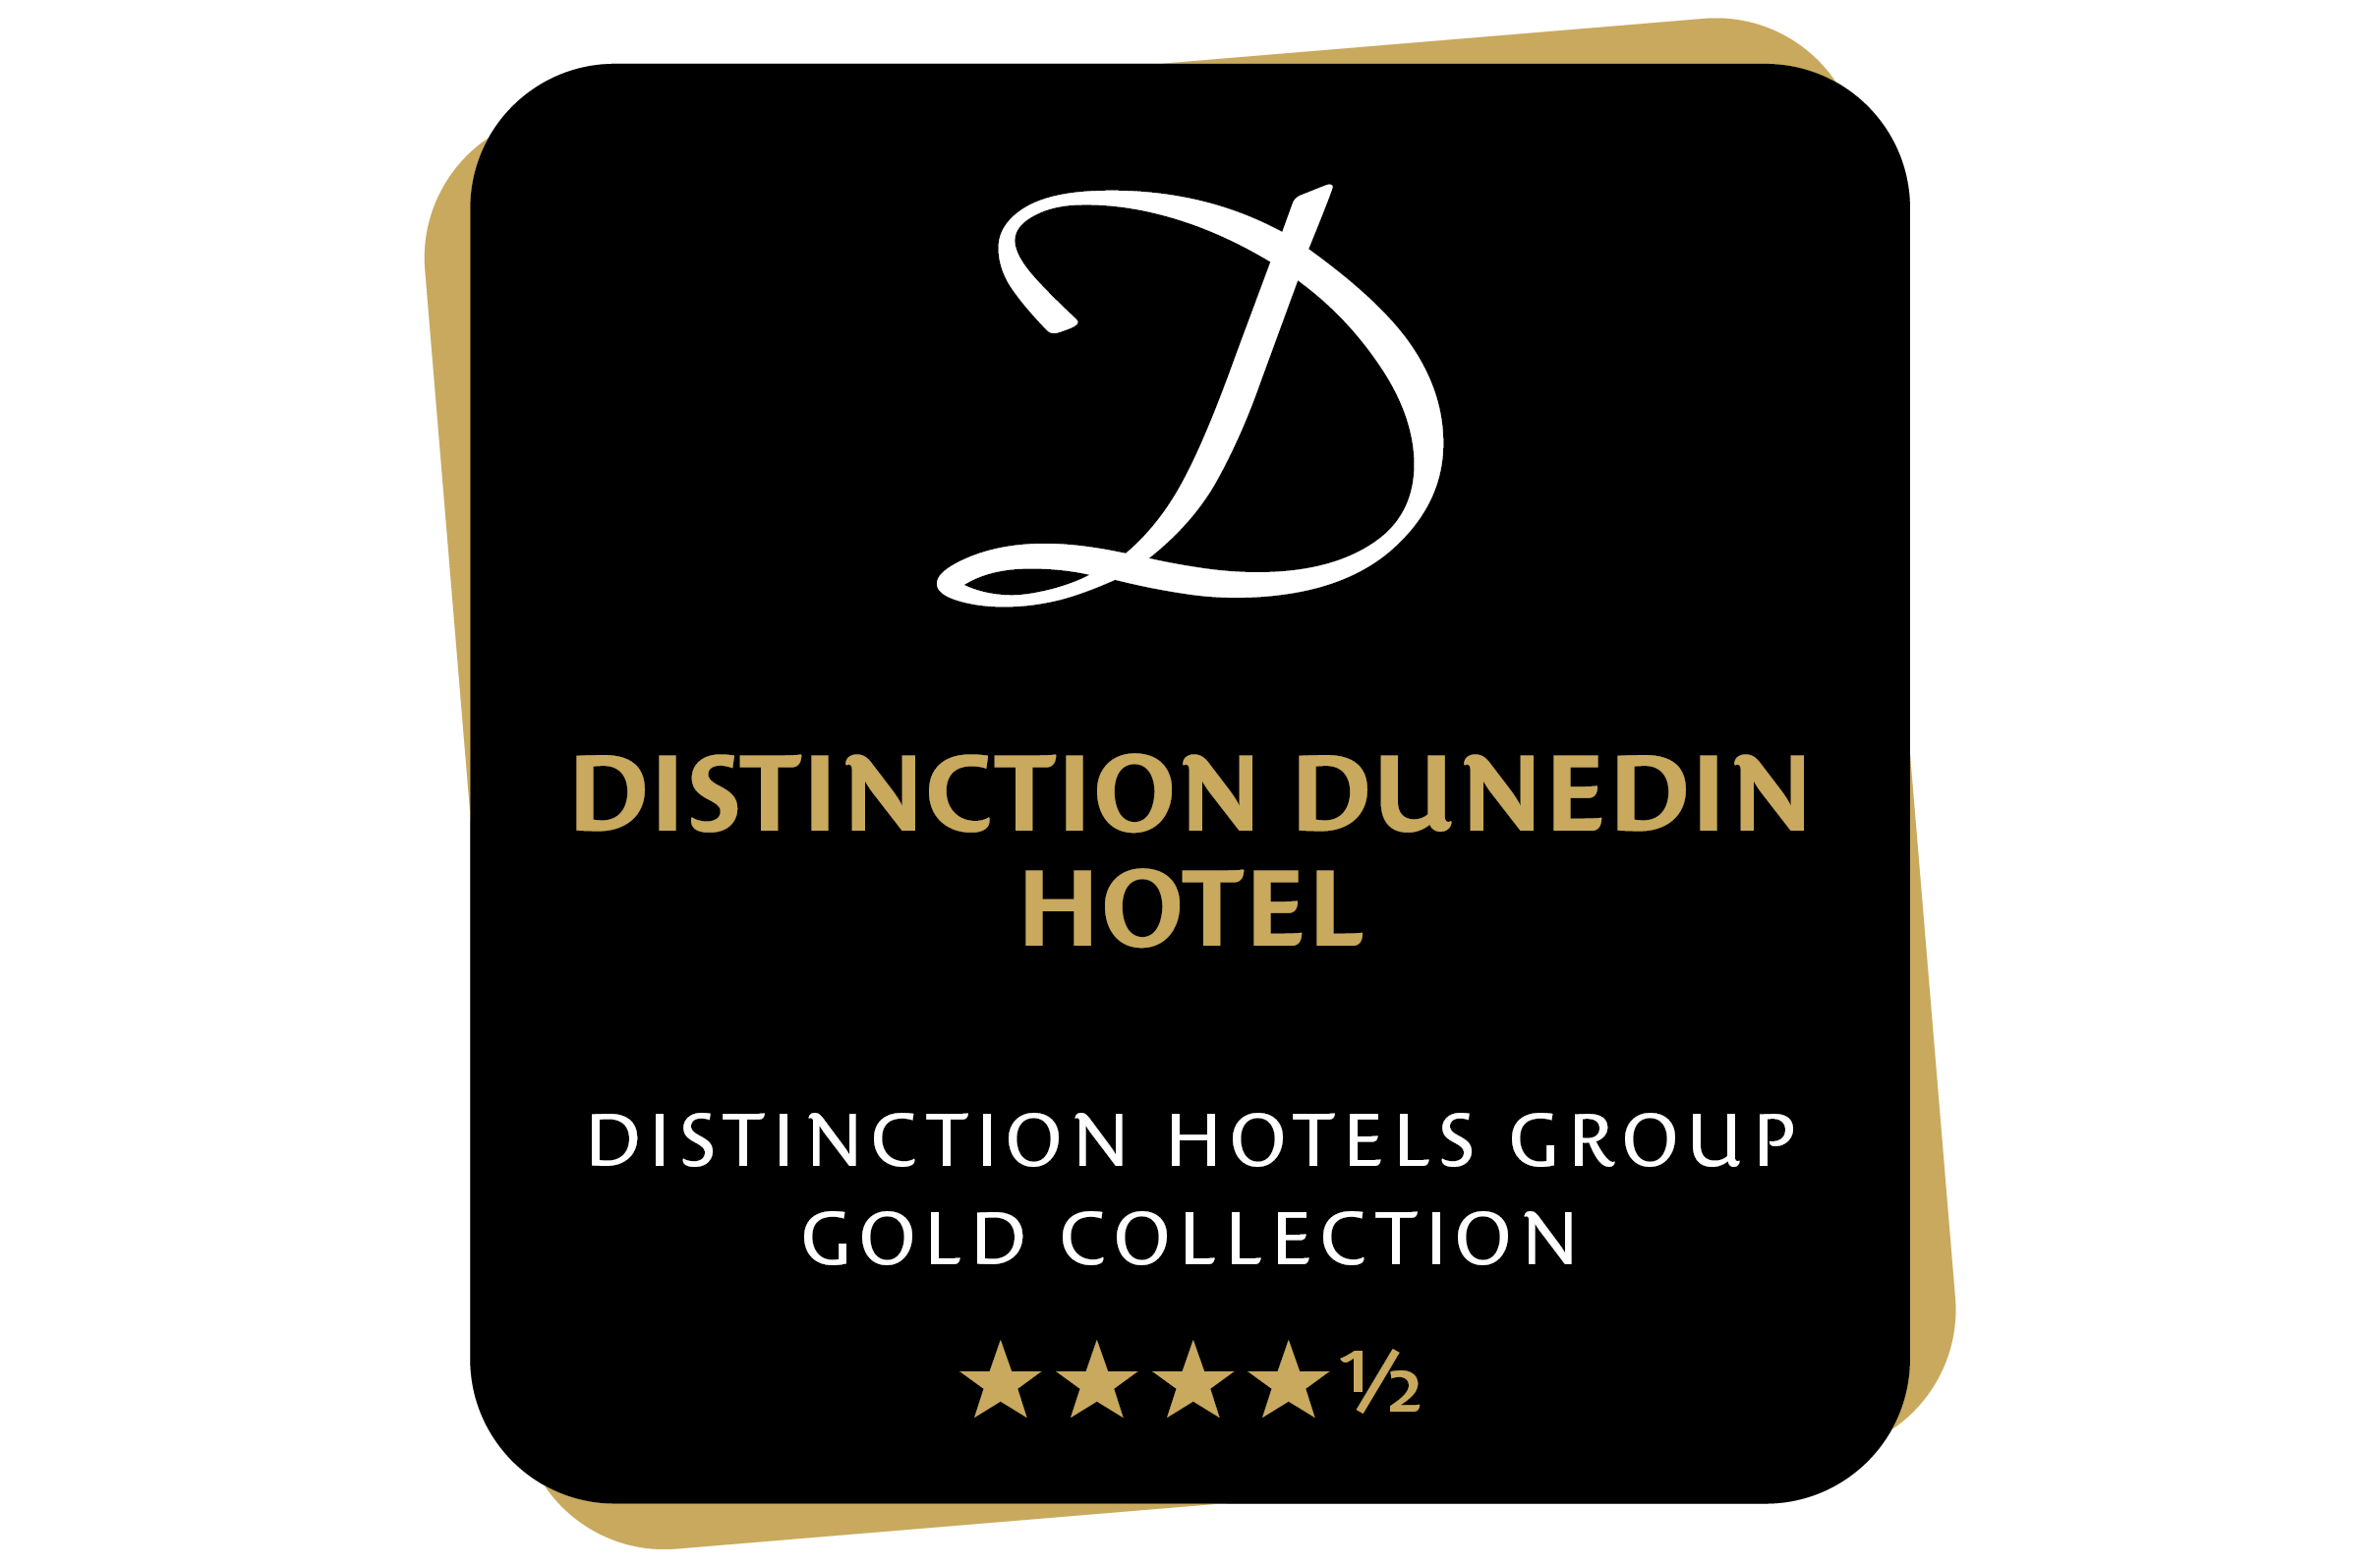 
Distinction Dunedin Hotel